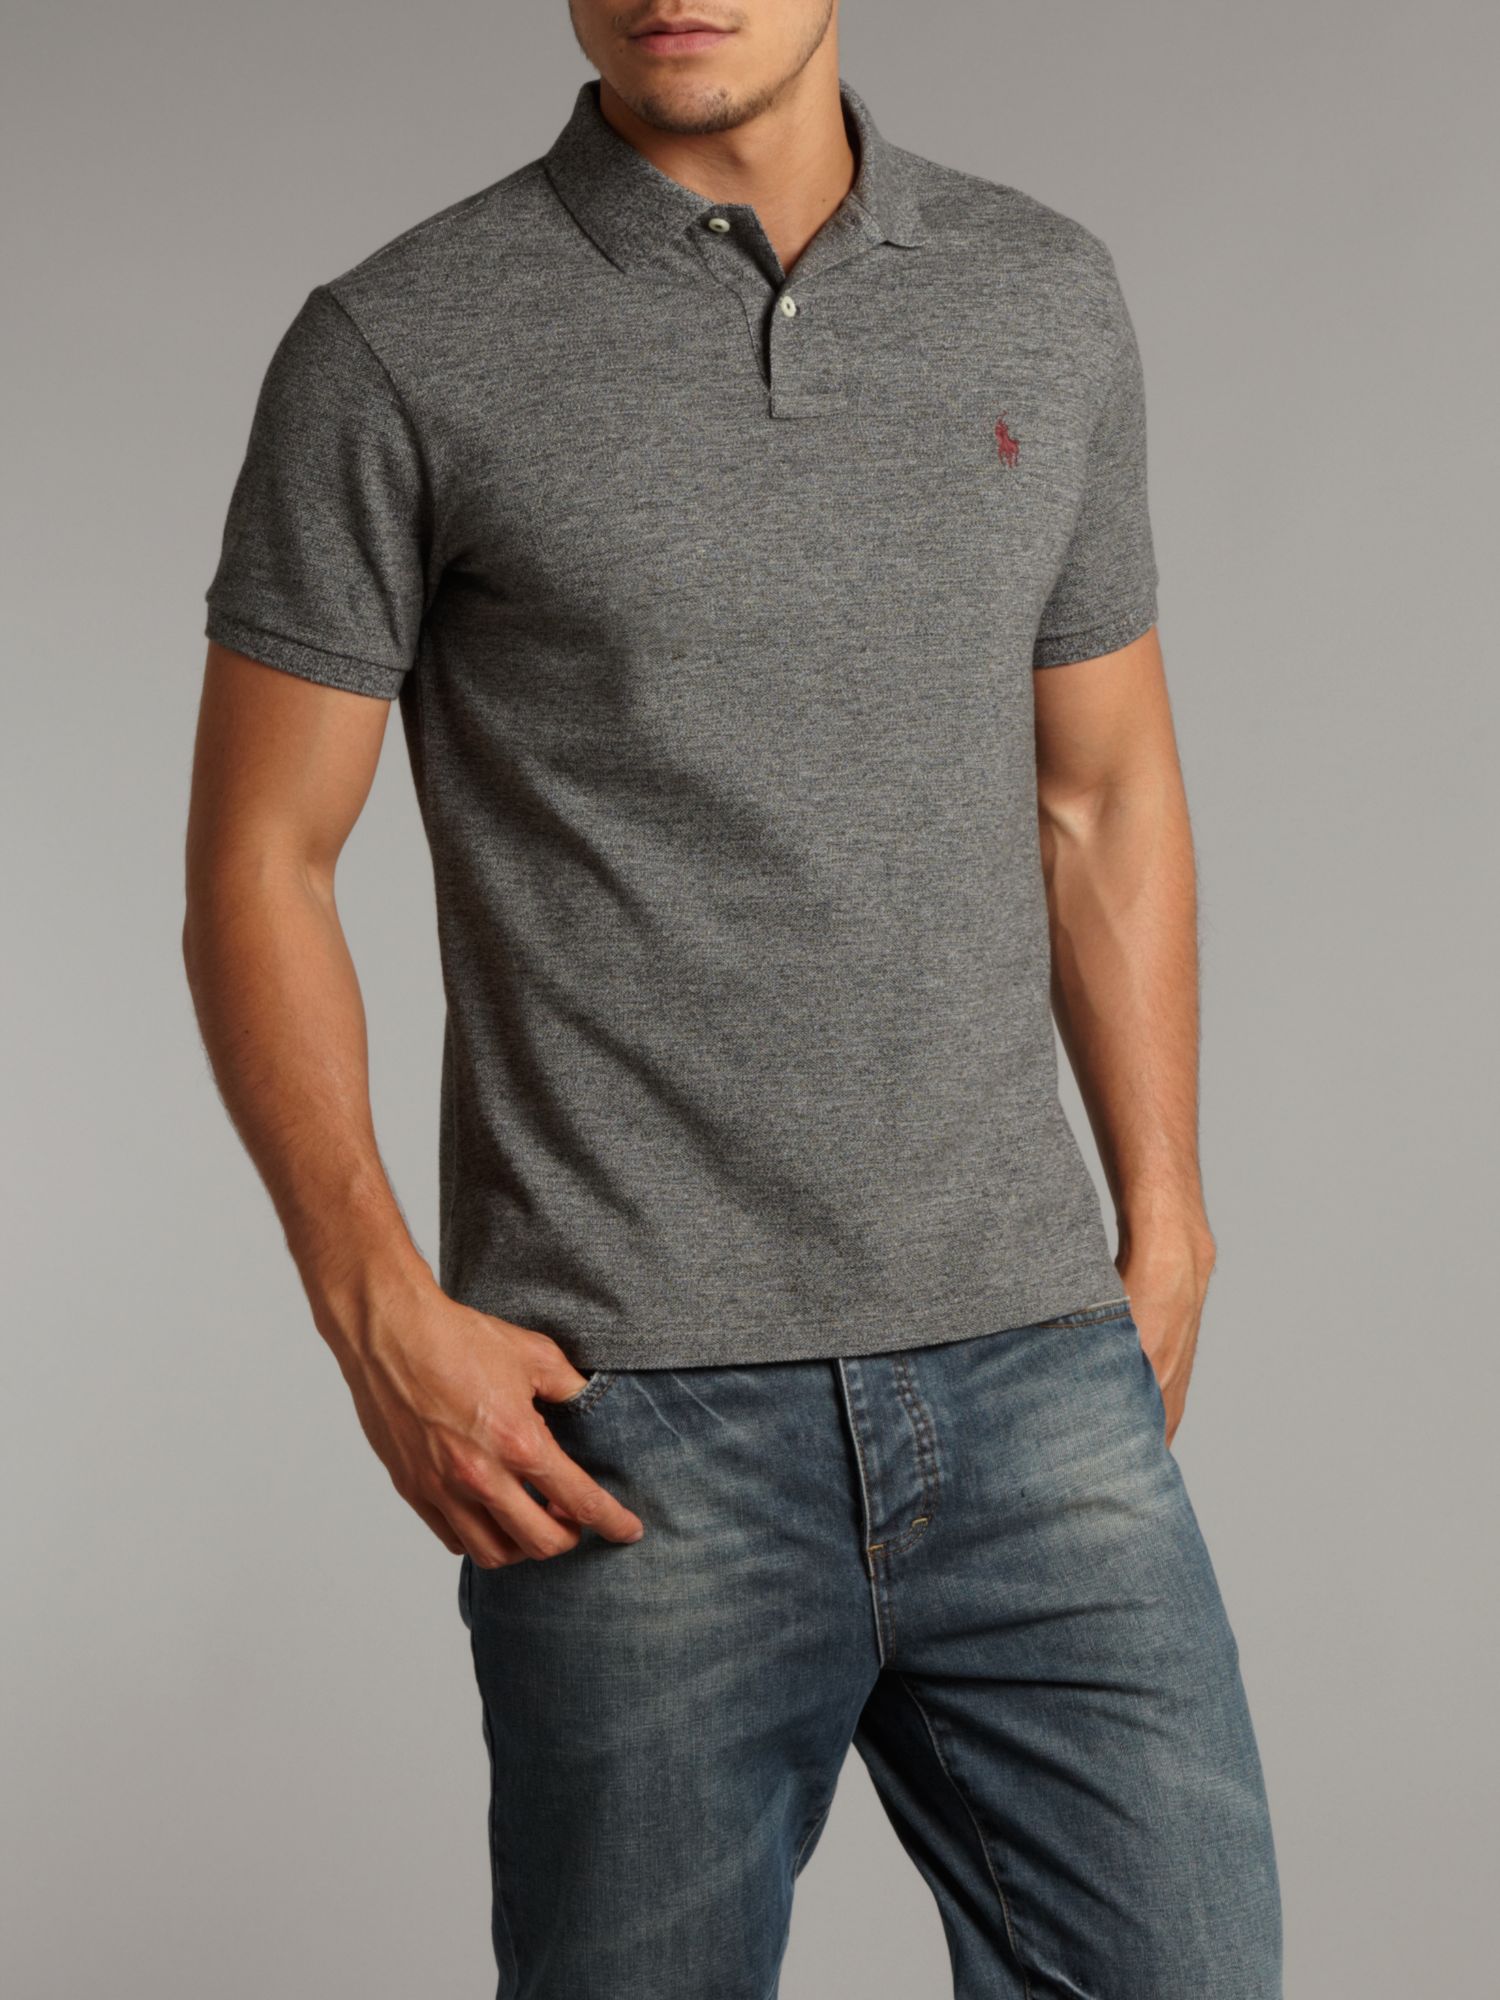 Polo Ralph Lauren Custom Fit Polo Shirt in Grey (Grey) for Men - Lyst